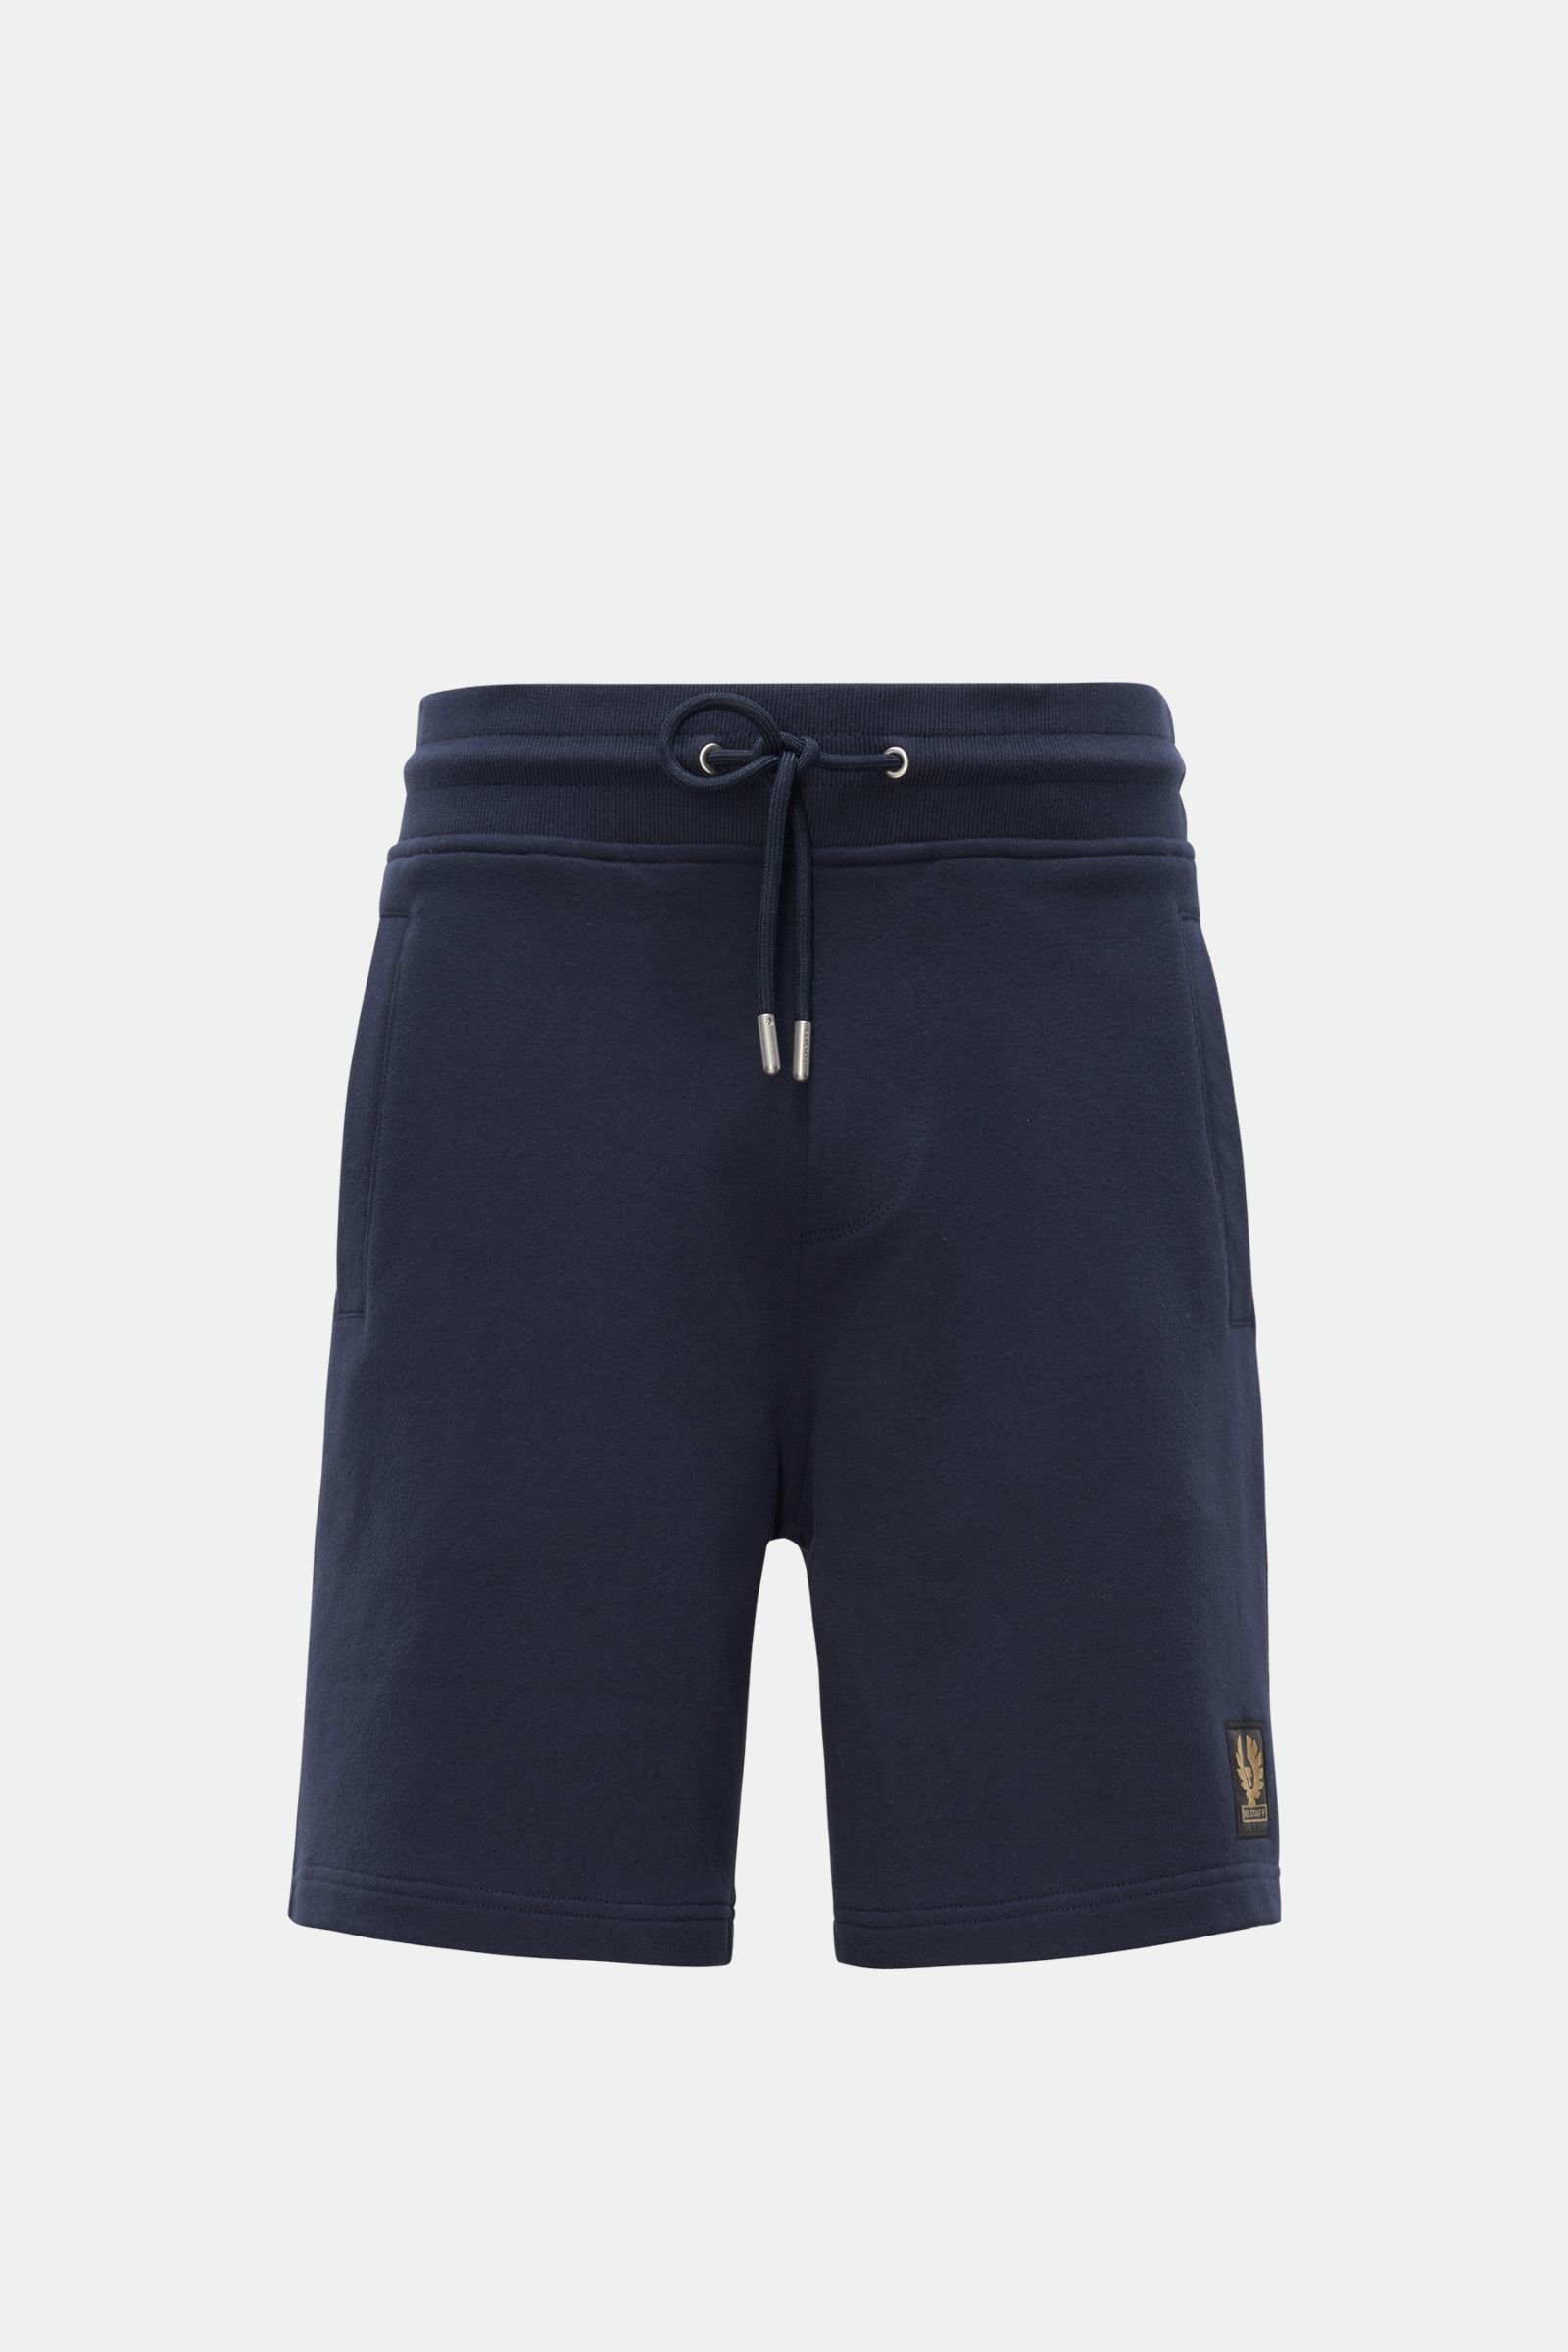 Sweat shorts navy